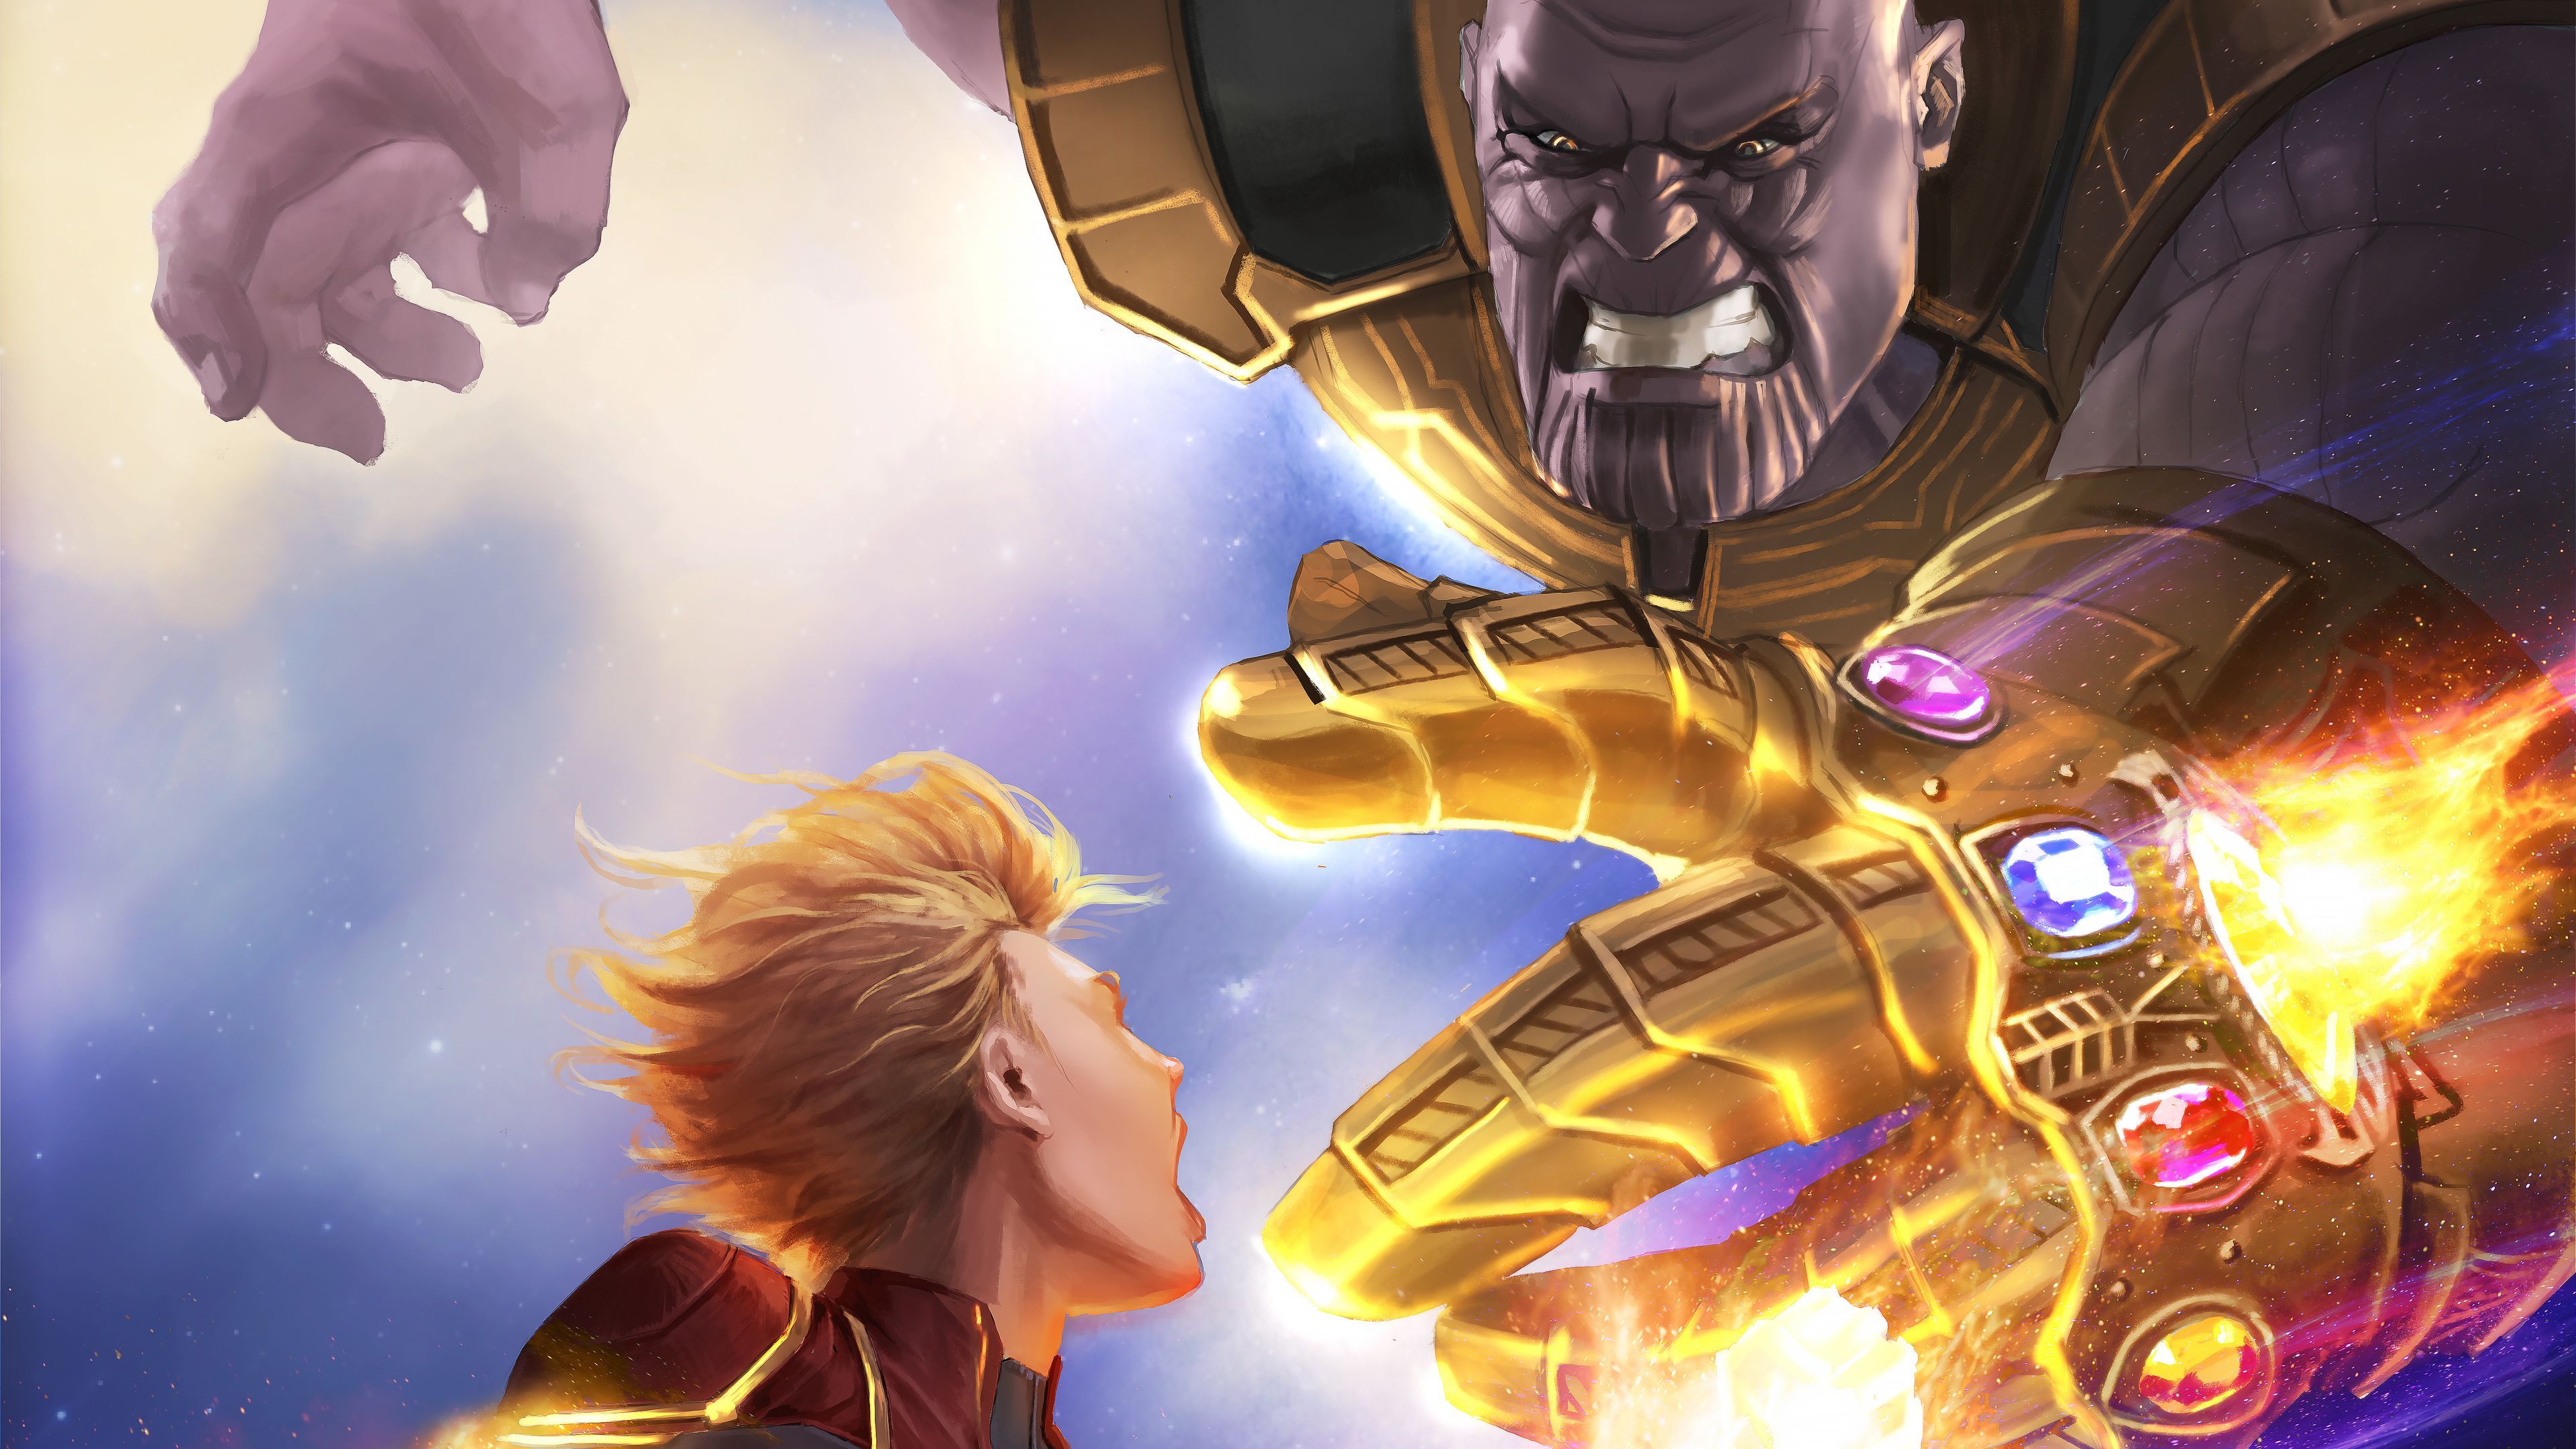 4K wallpaper: Captain Marvel Vs Thanos Wallpaper